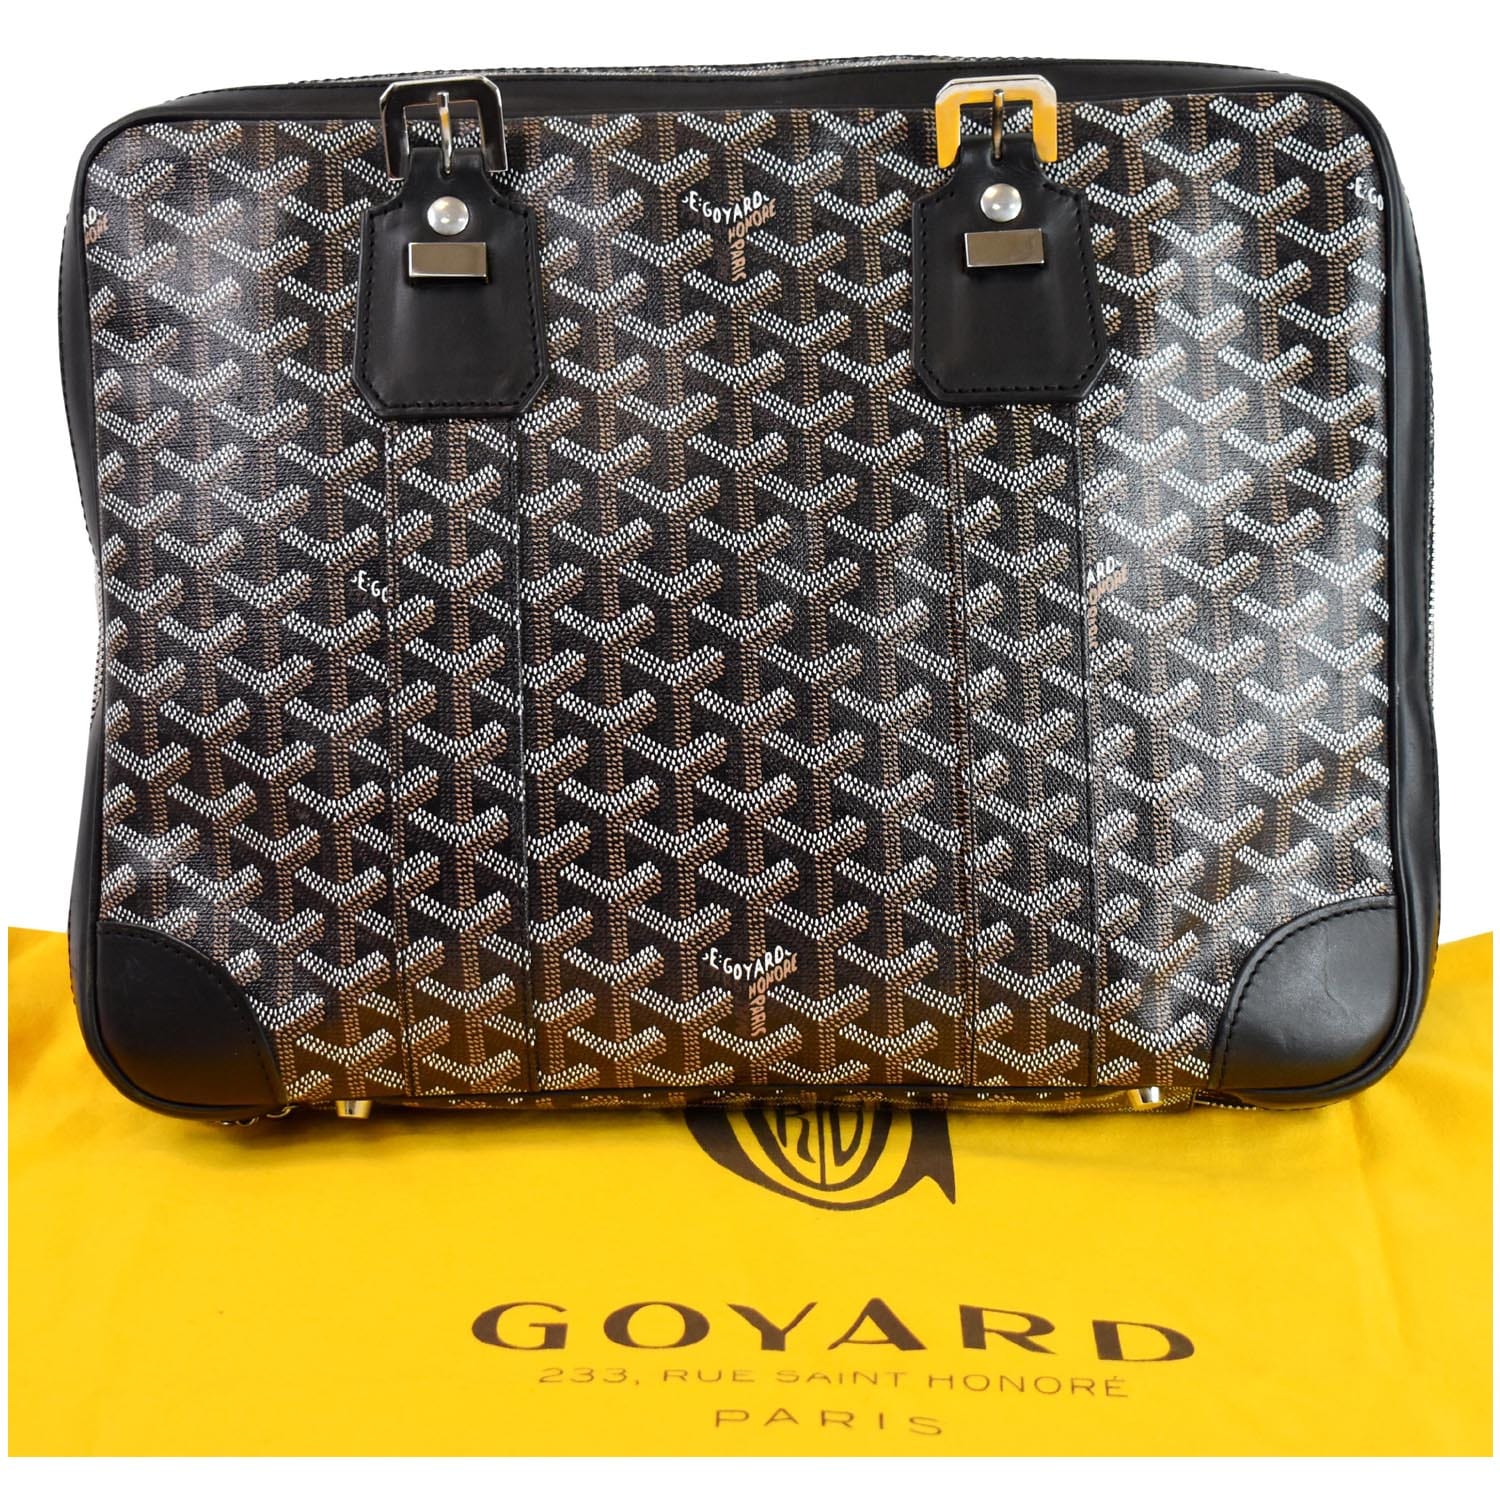 GOYARD Goyardine Ambassade MM Briefcase Black 248601